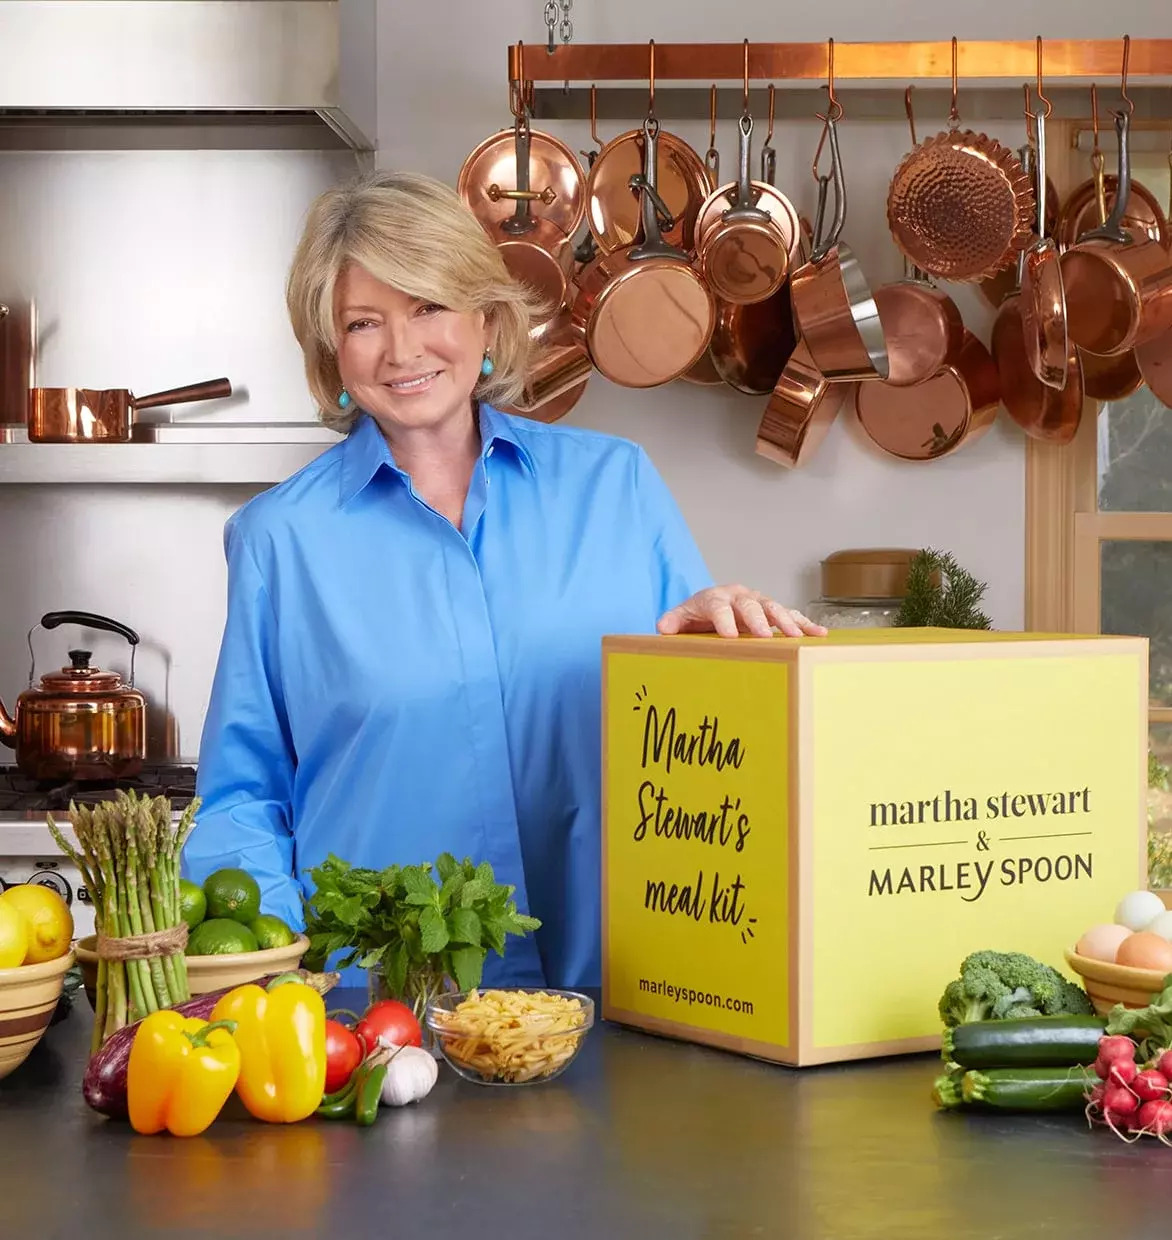 Martha Stewart and Marley Spoon meal kit